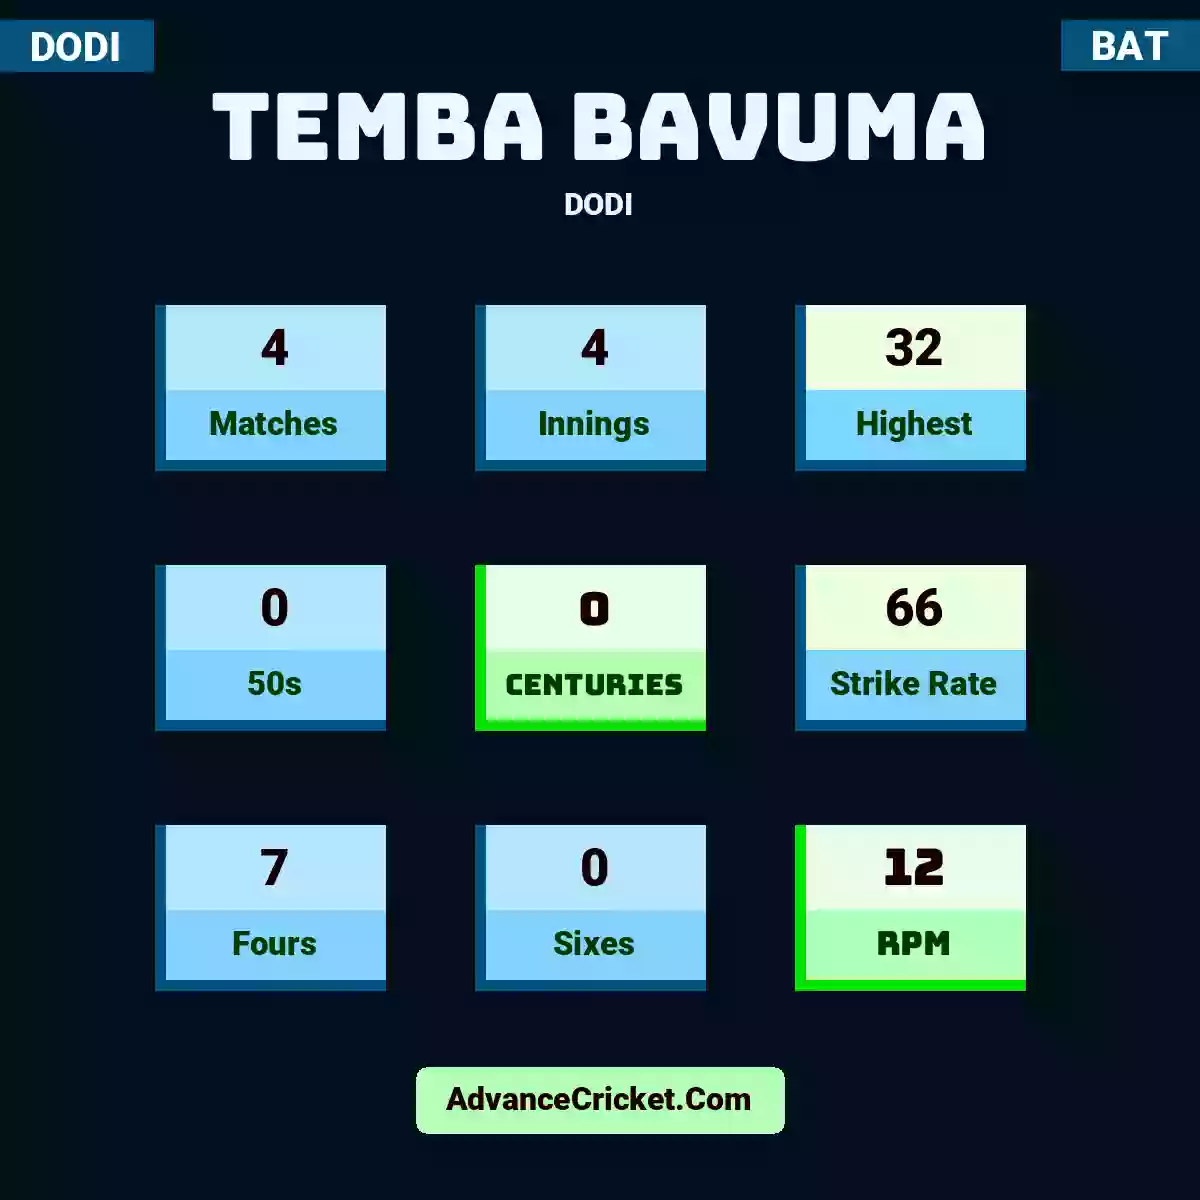 Temba Bavuma DODI , Temba Bavuma played 4 matches, scored 32 runs as highest, 0 half-centuries, and 0 centuries, with a strike rate of 66. T.Bavuma hit 7 fours and 0 sixes, with an RPM of 12.